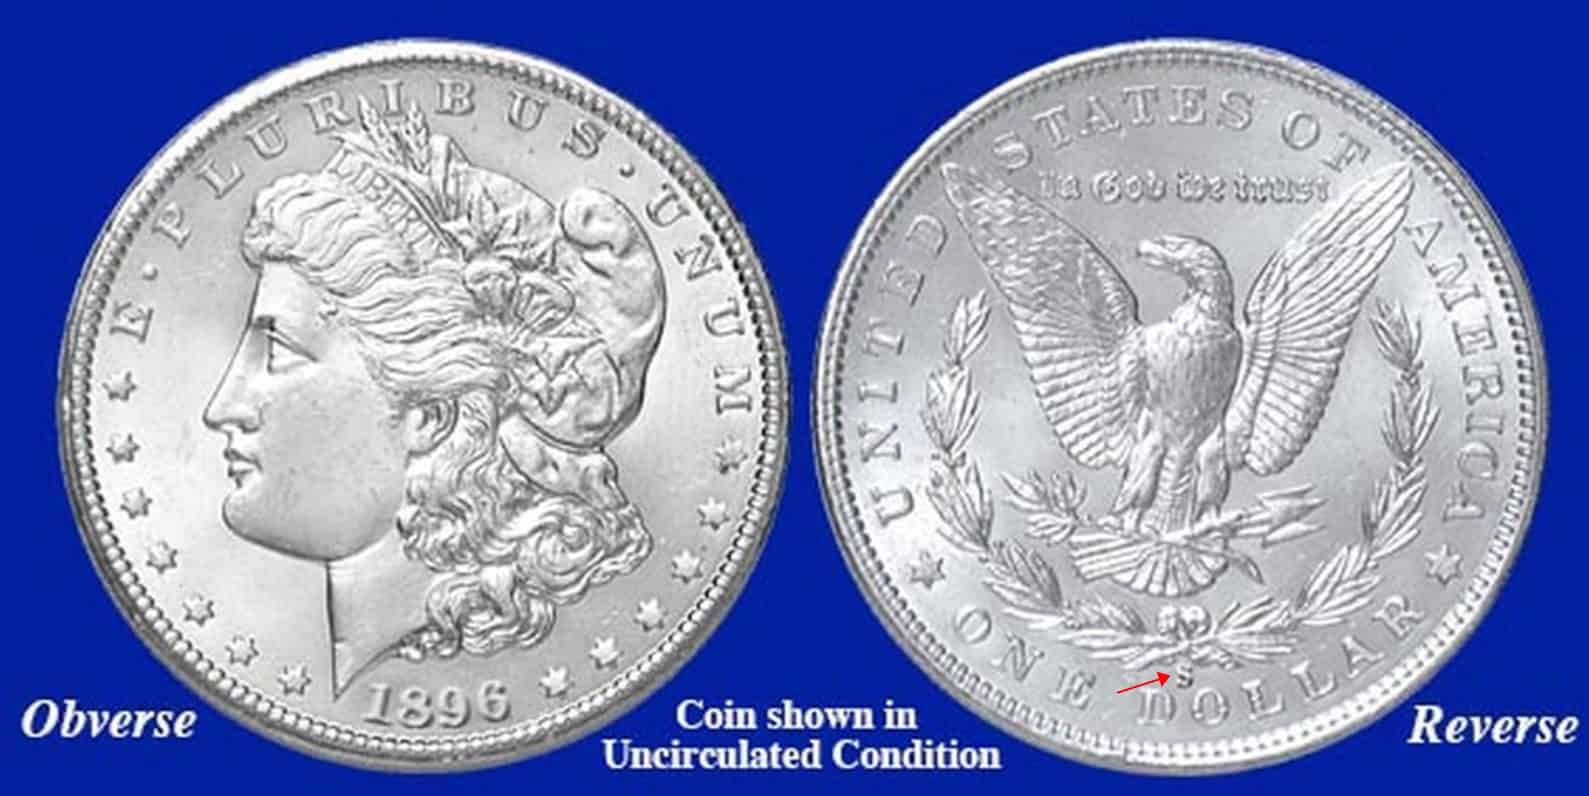 1896 S Morgan silver dollar